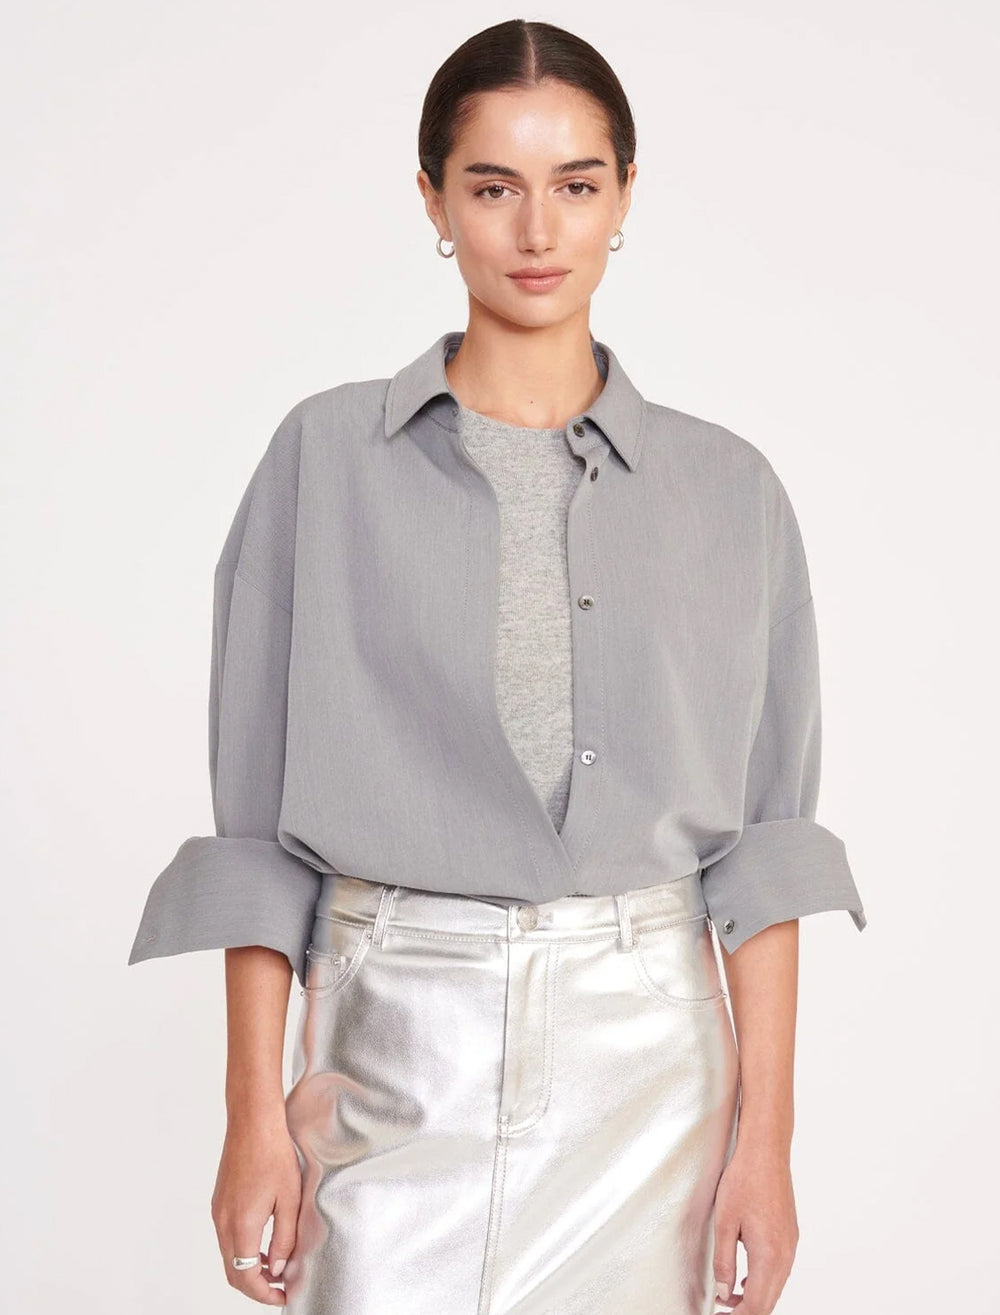 Model wearing STAUD's colton shirt in heather grey.